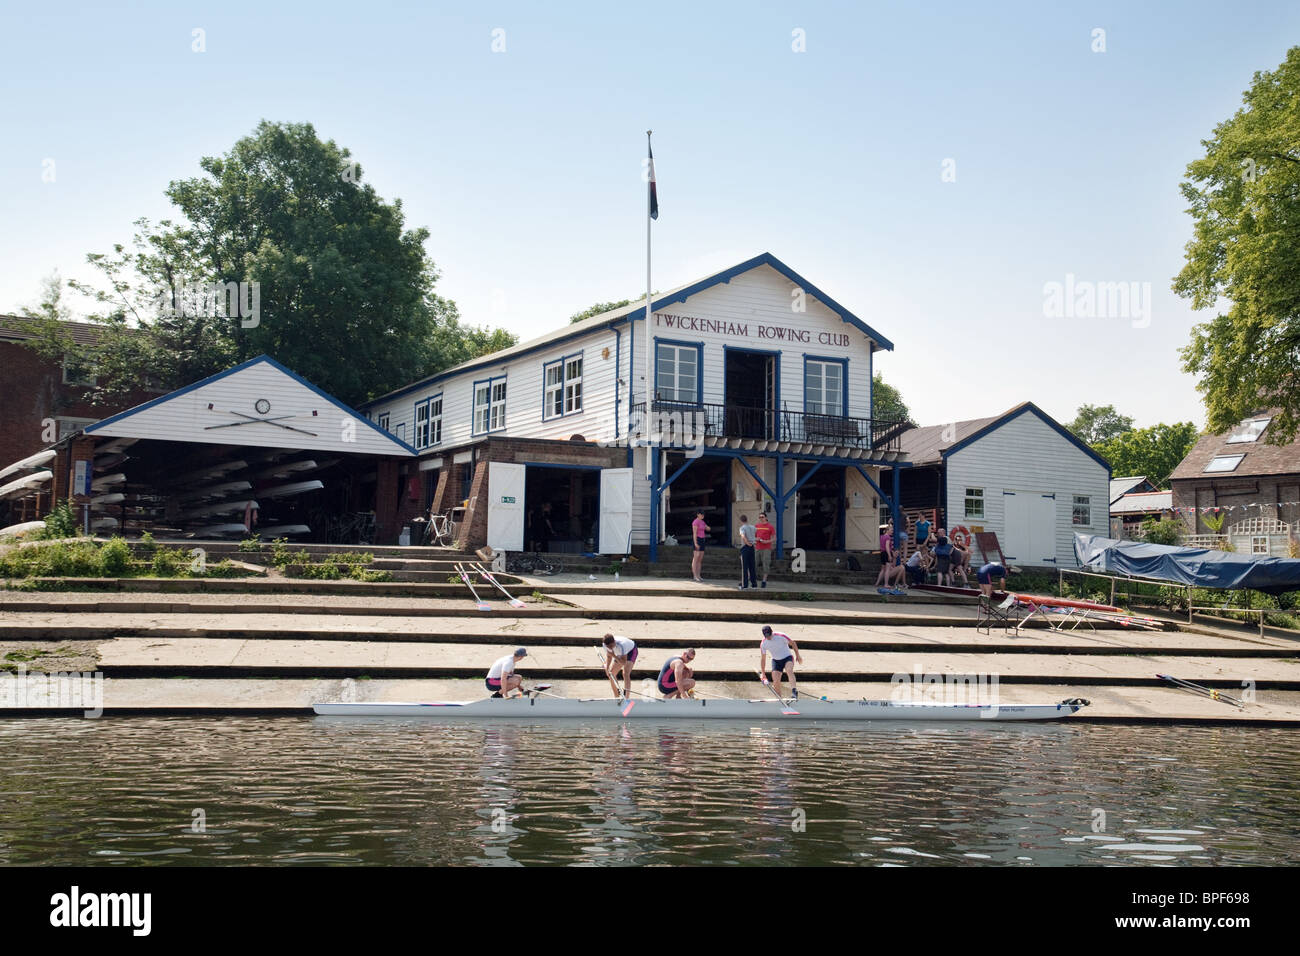 Twickenham rowing club on the river Thames at Eel Pie island, Twickenham London UK Stock Photo